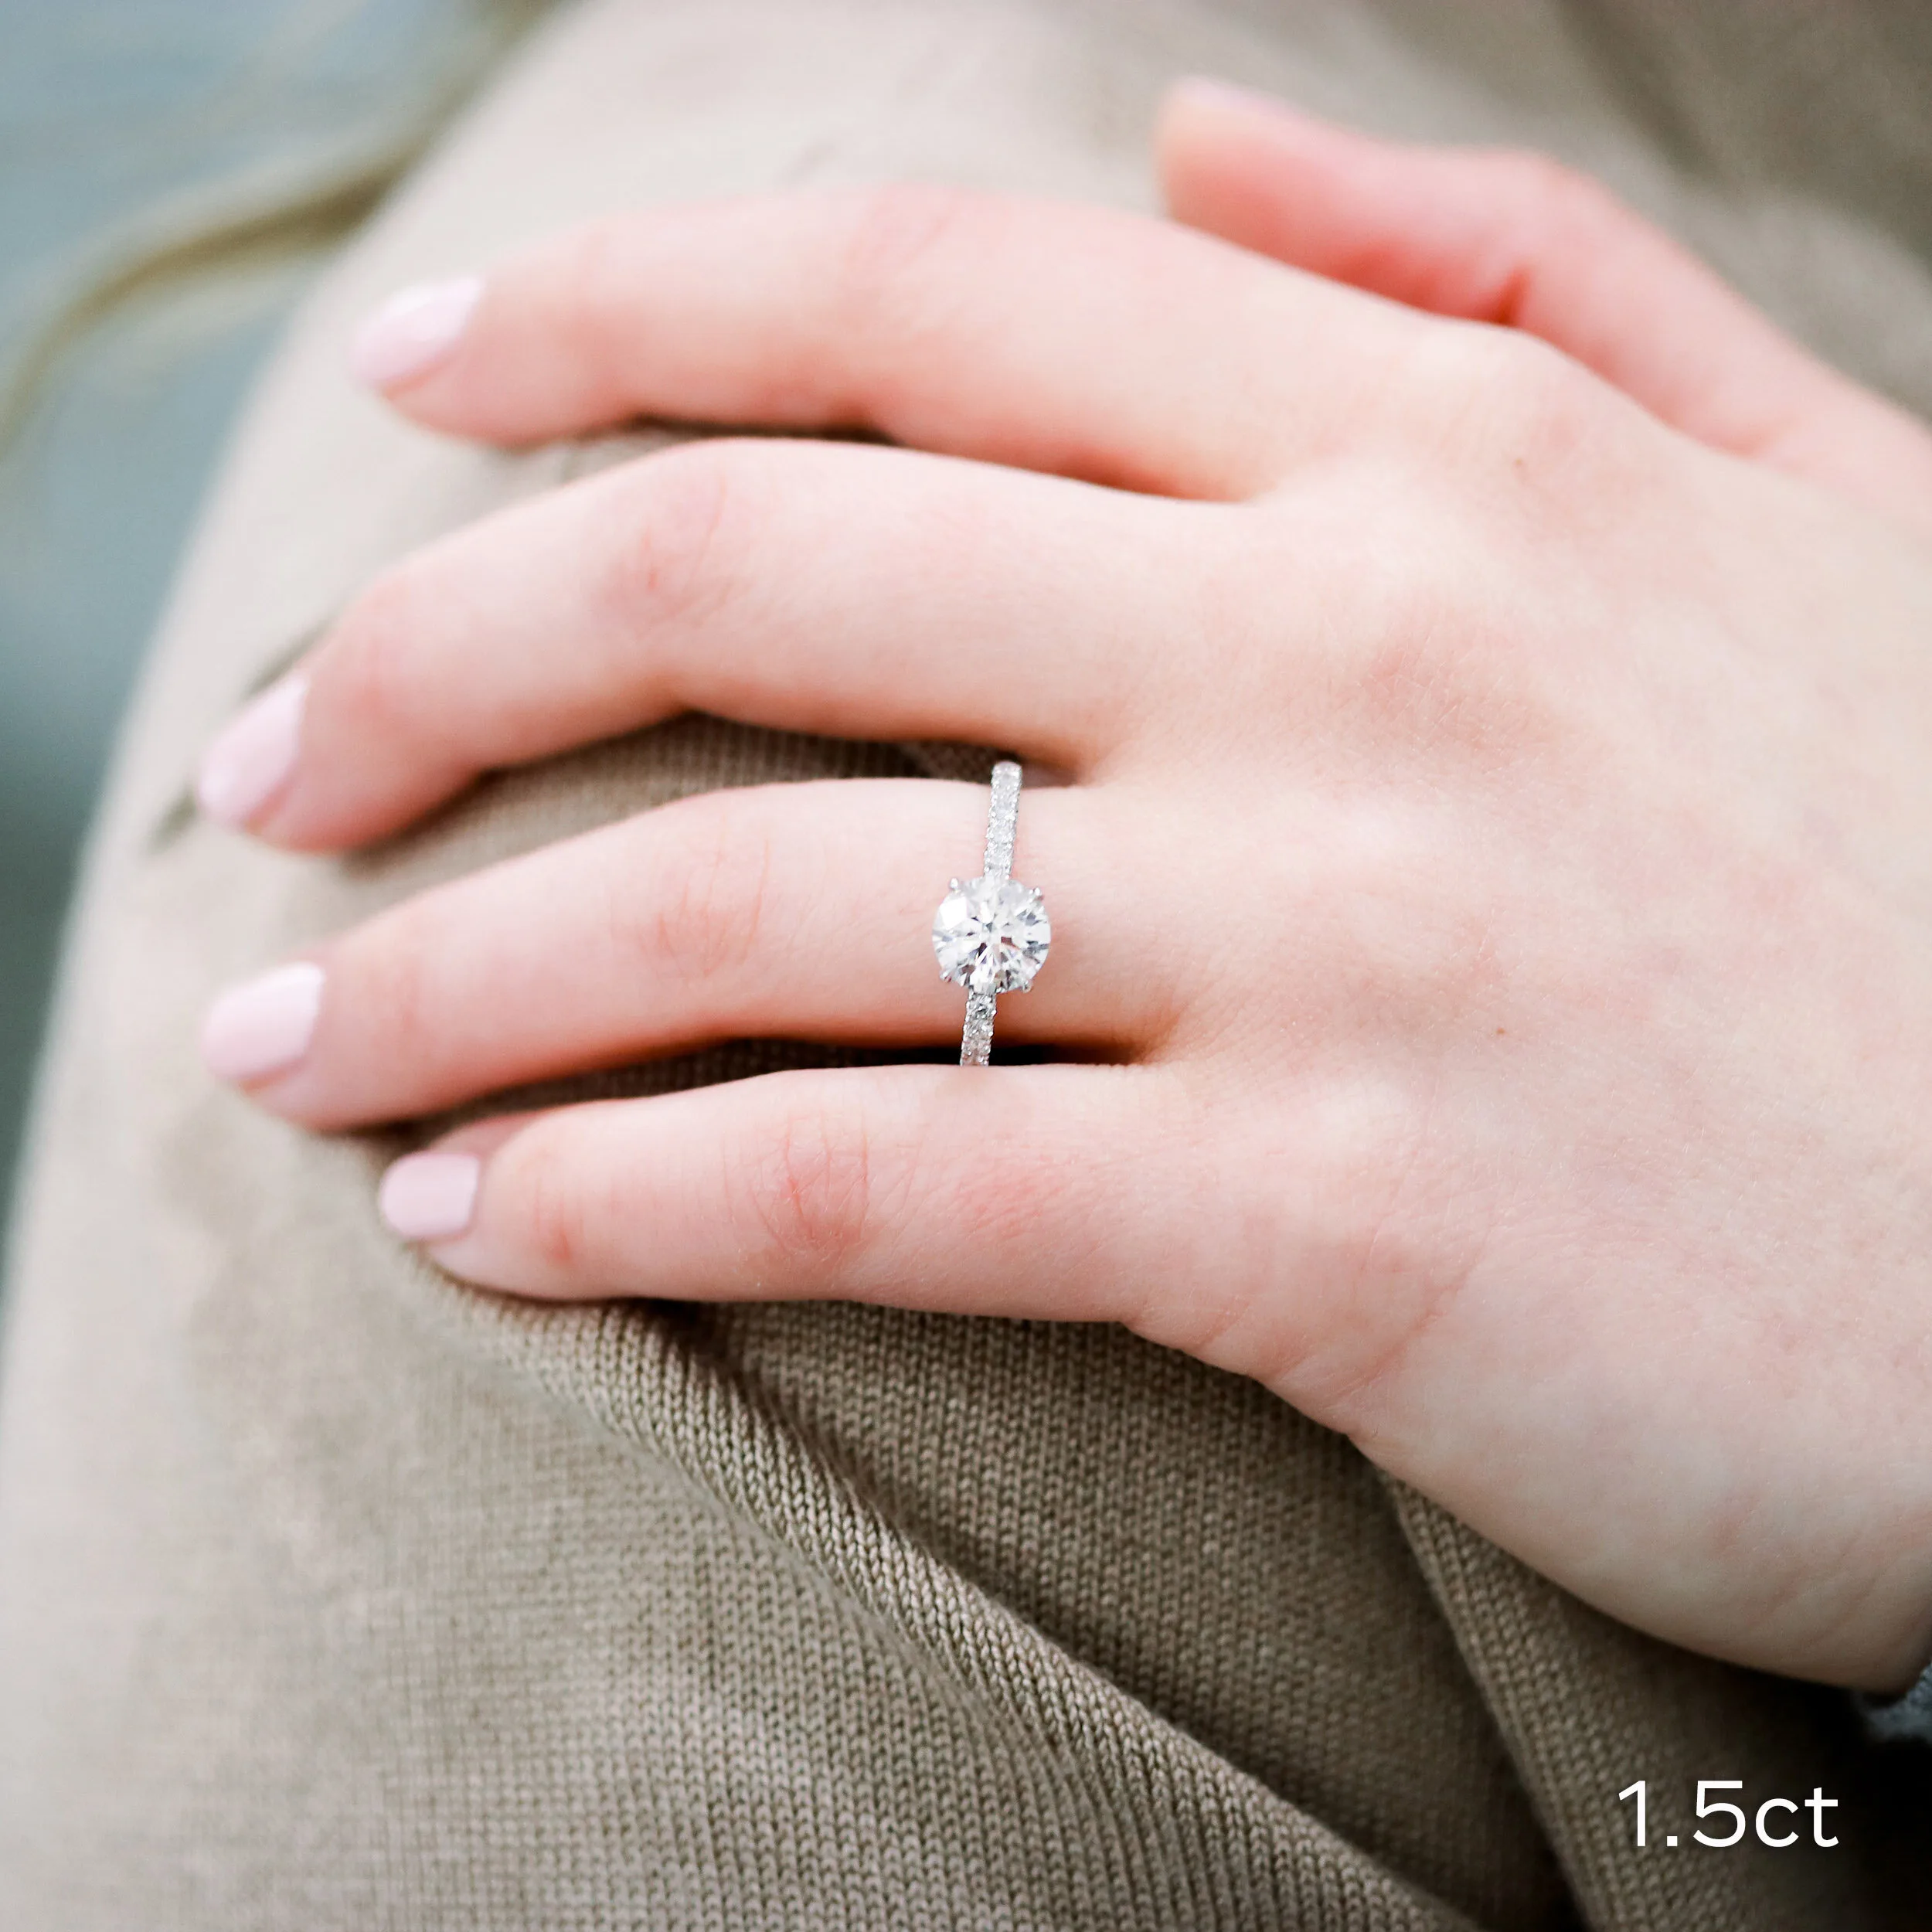 18k White Gold Diamond Engagement Ring featuring 1.5 Carat Round Lab Diamond and Diamonds on the Band Ada Diamonds Design 134 on Hand